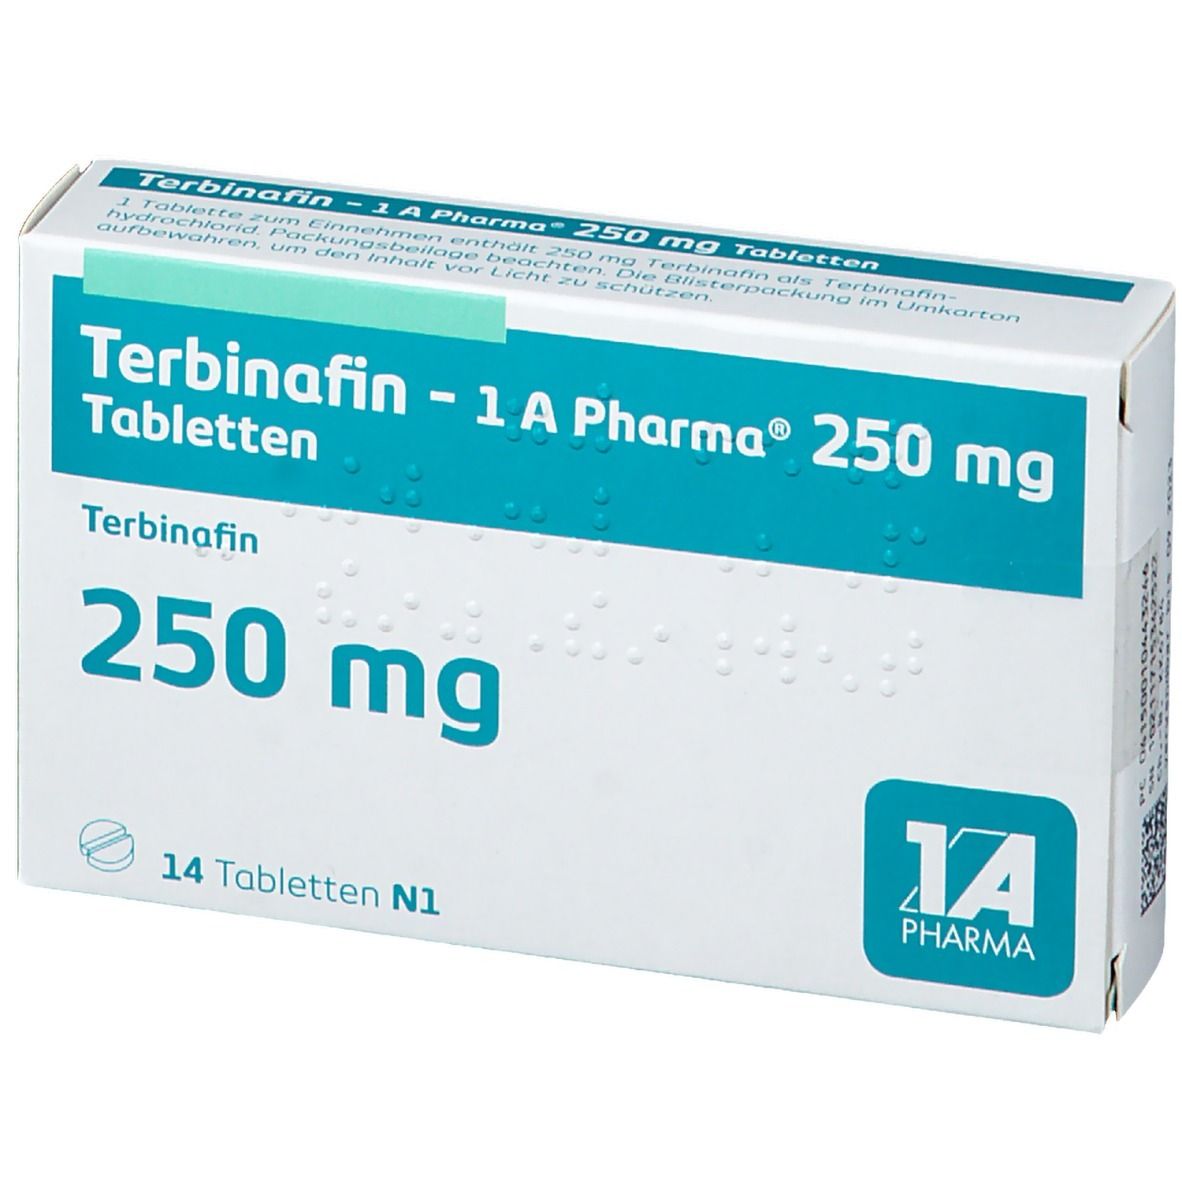 Terbinafin 1A Pharma® 250Mg